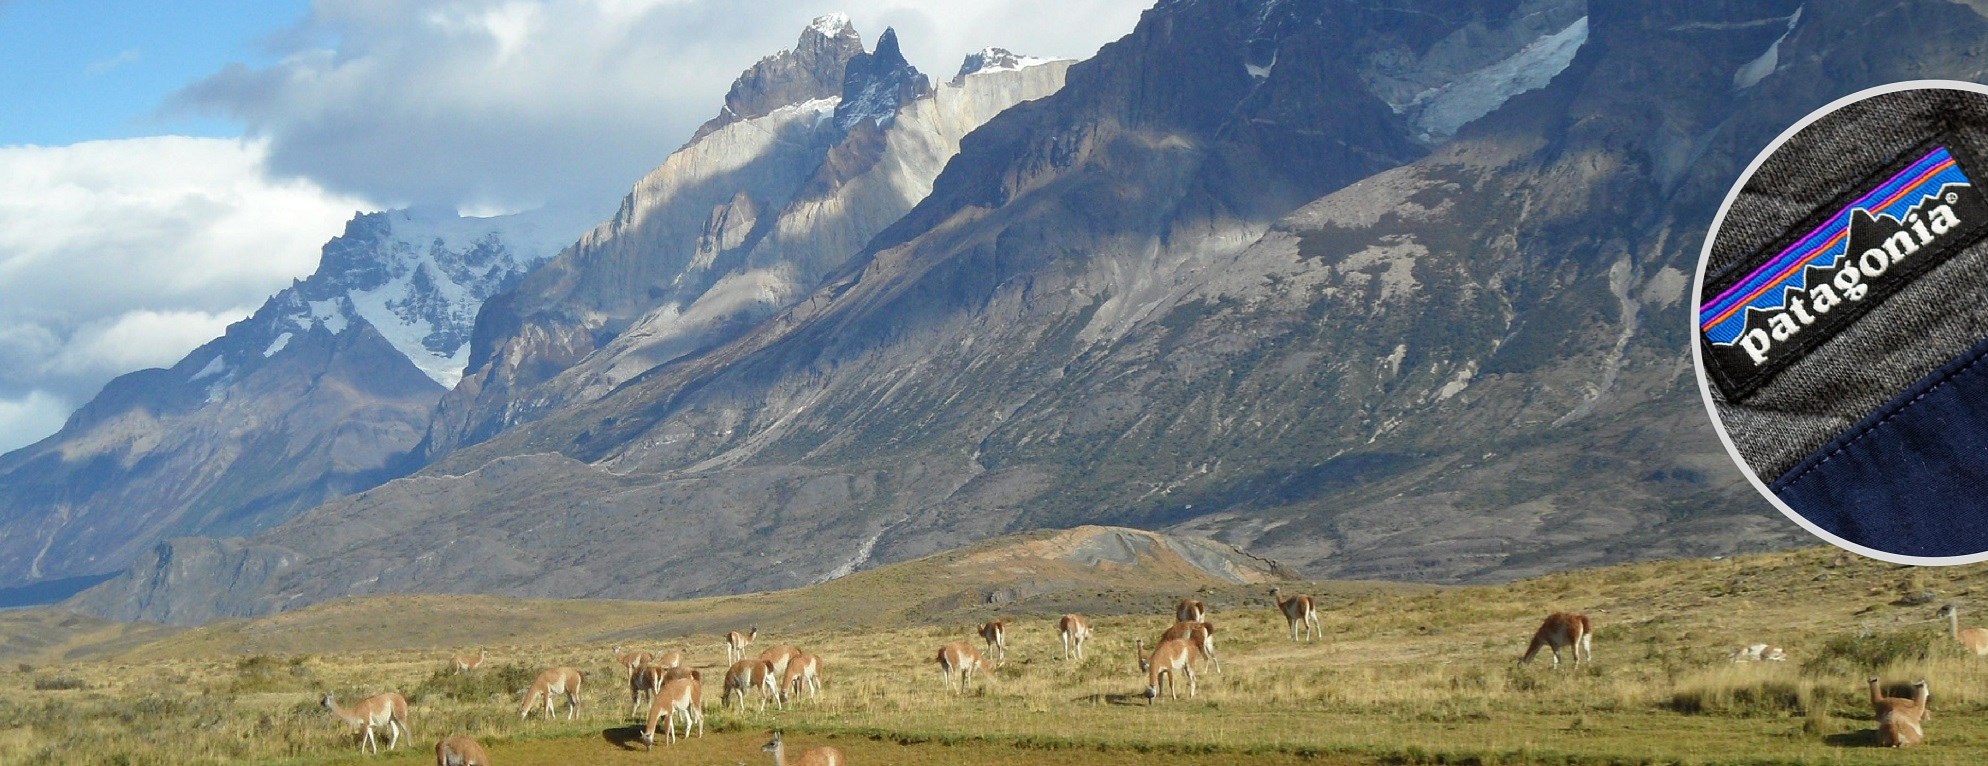 Patagonia, landskap og merke